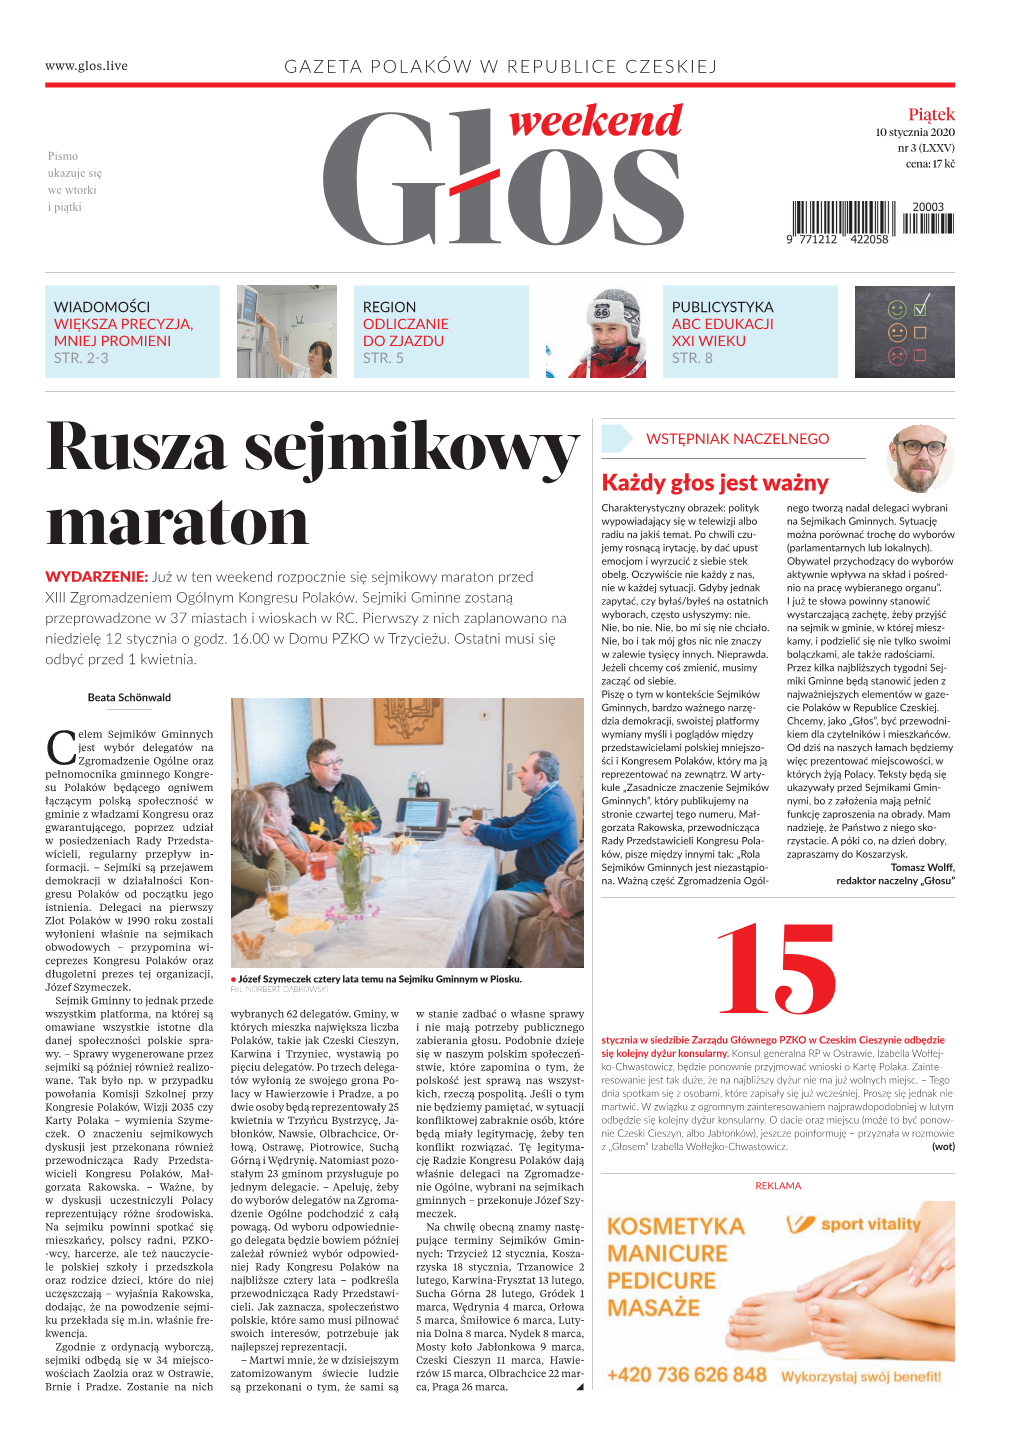 Rusza Sejmikowy Maraton